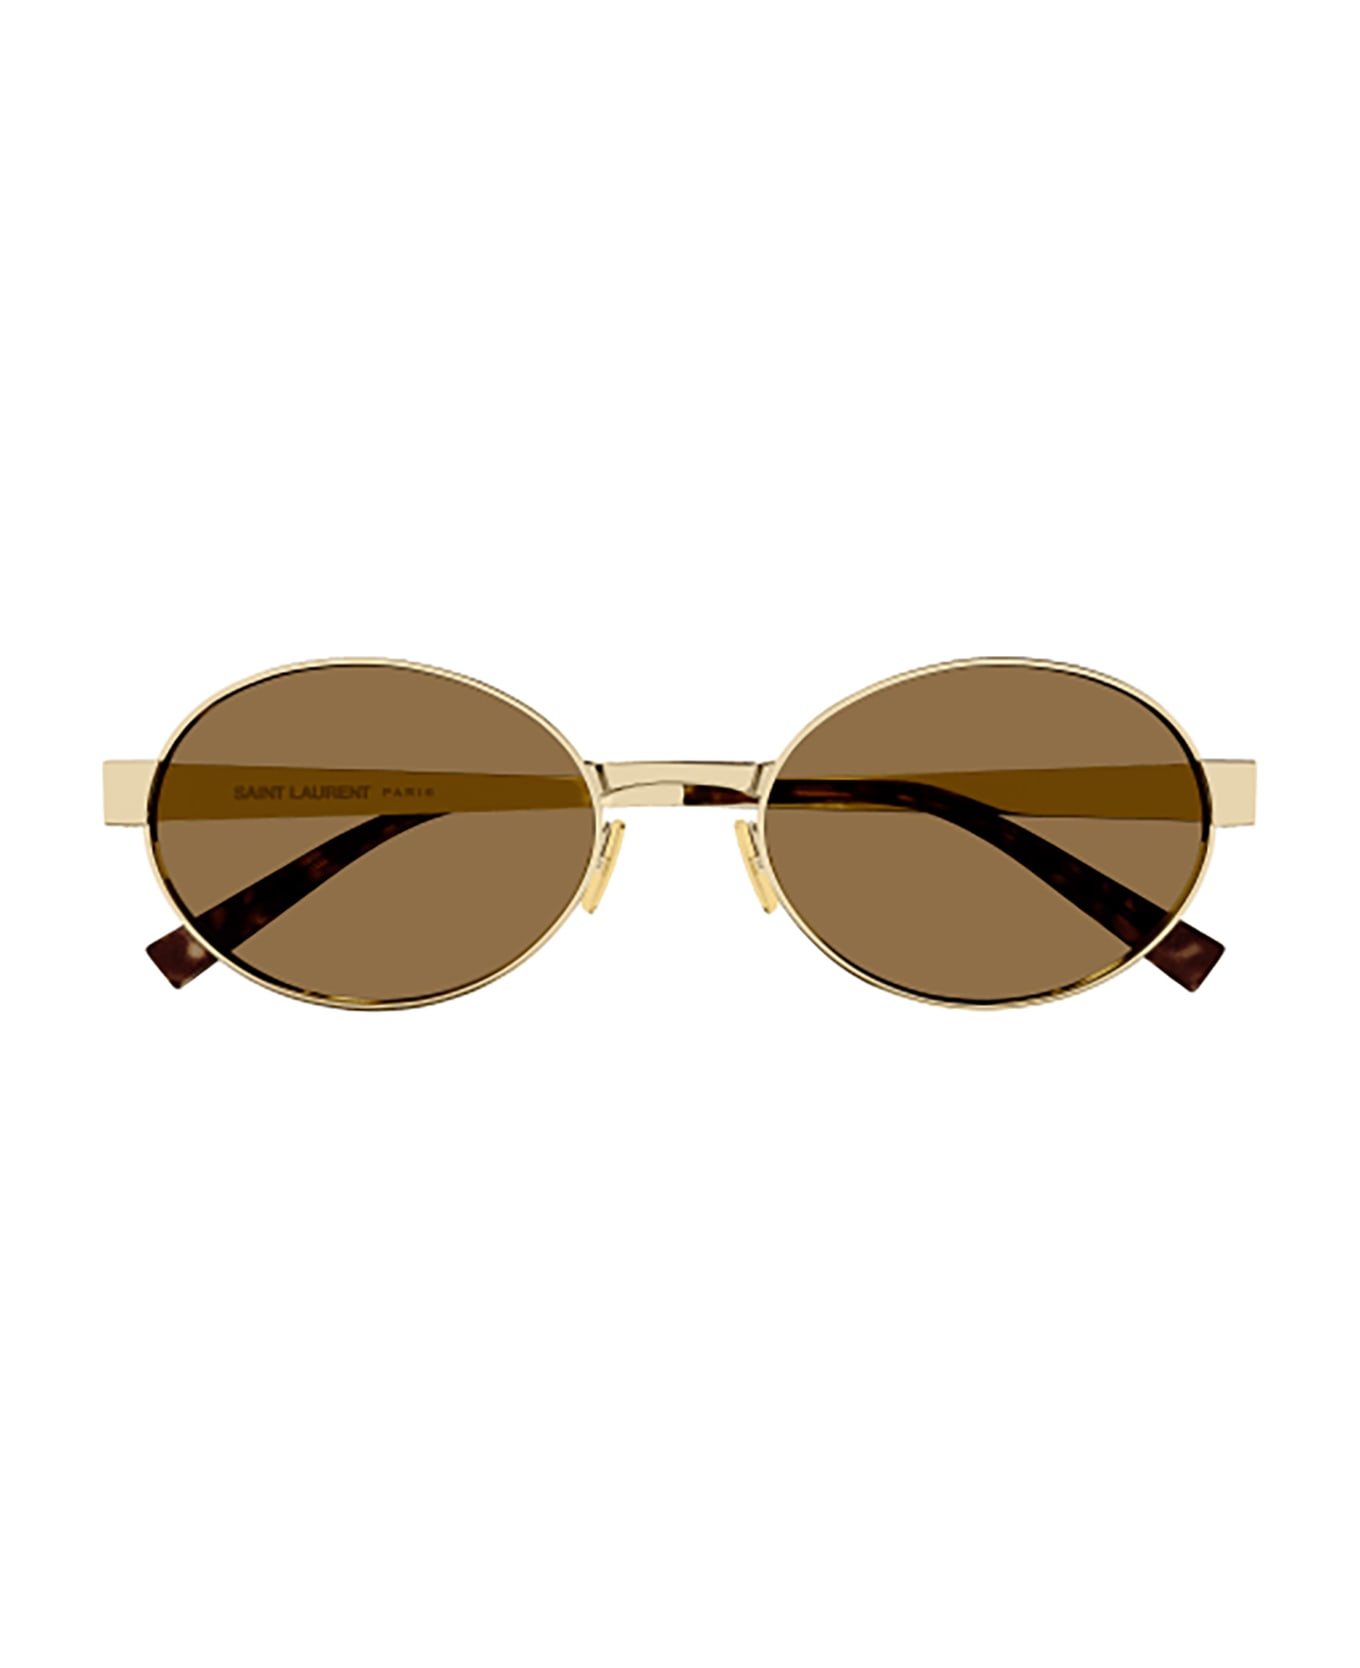 Saint Laurent Eyewear Sl 692 Sunglasses - 004 gold gold brown サングラス